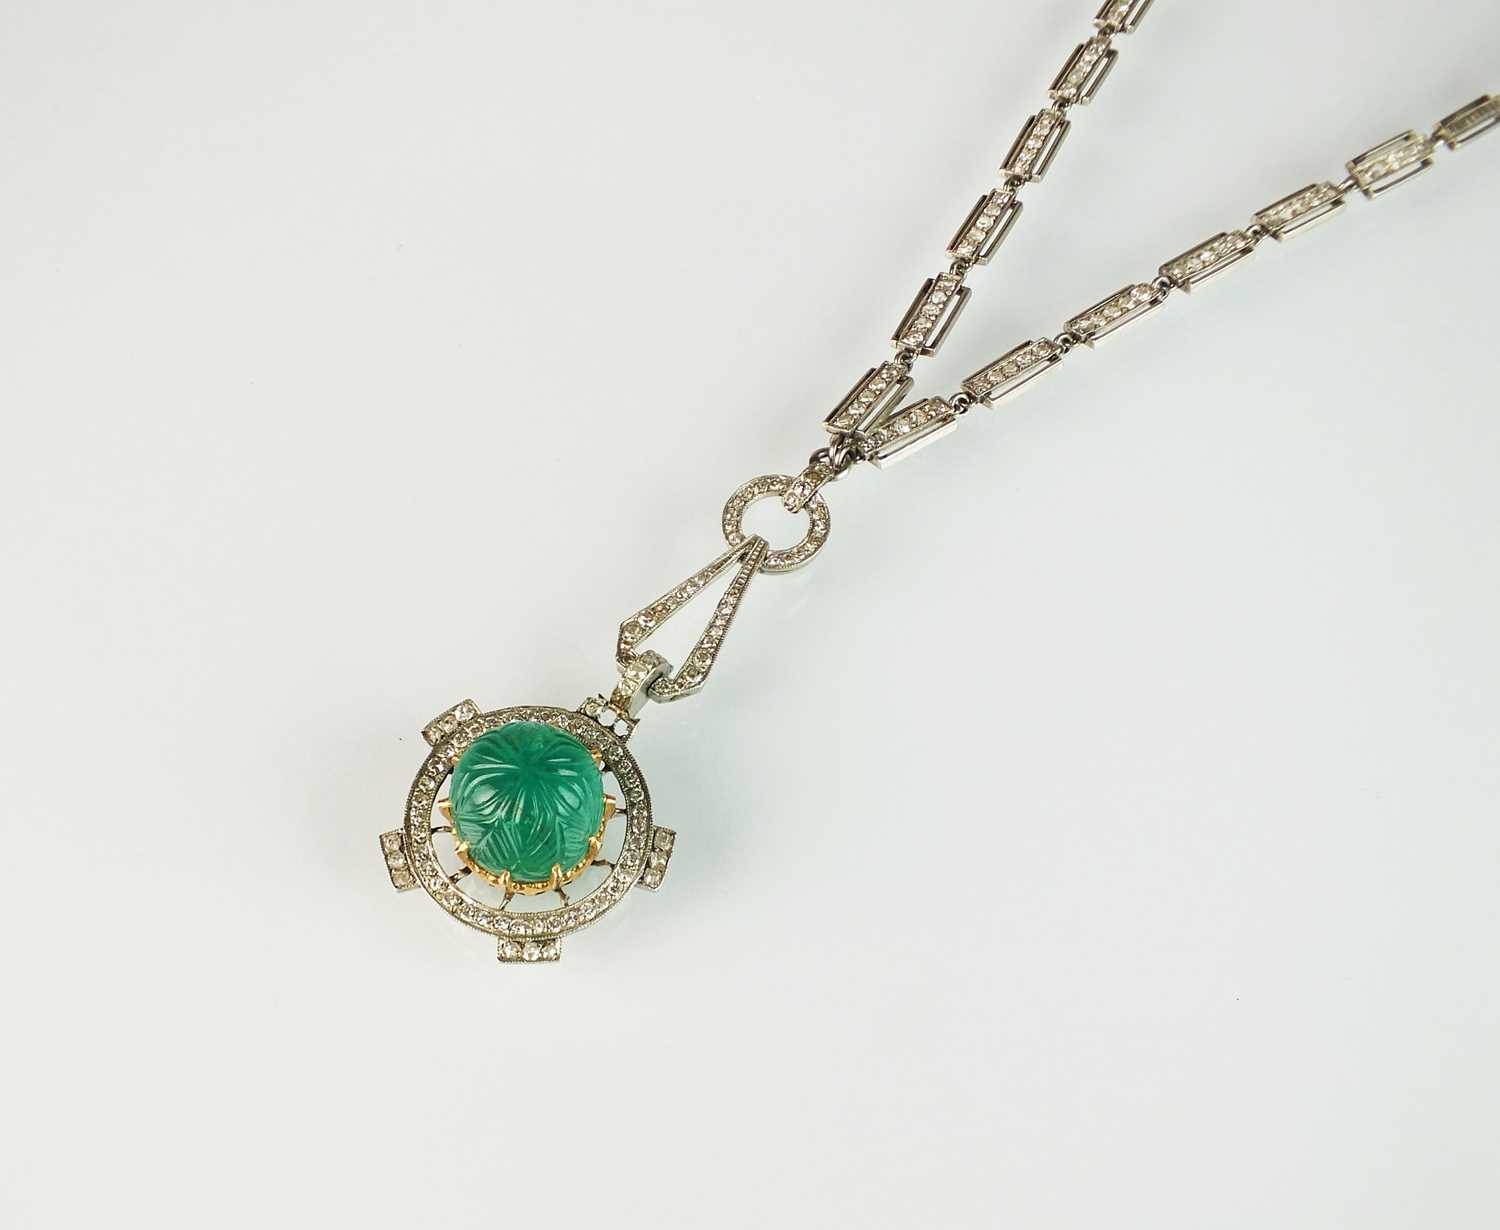 108 - An Art Deco emerald and diamond pendant on chain